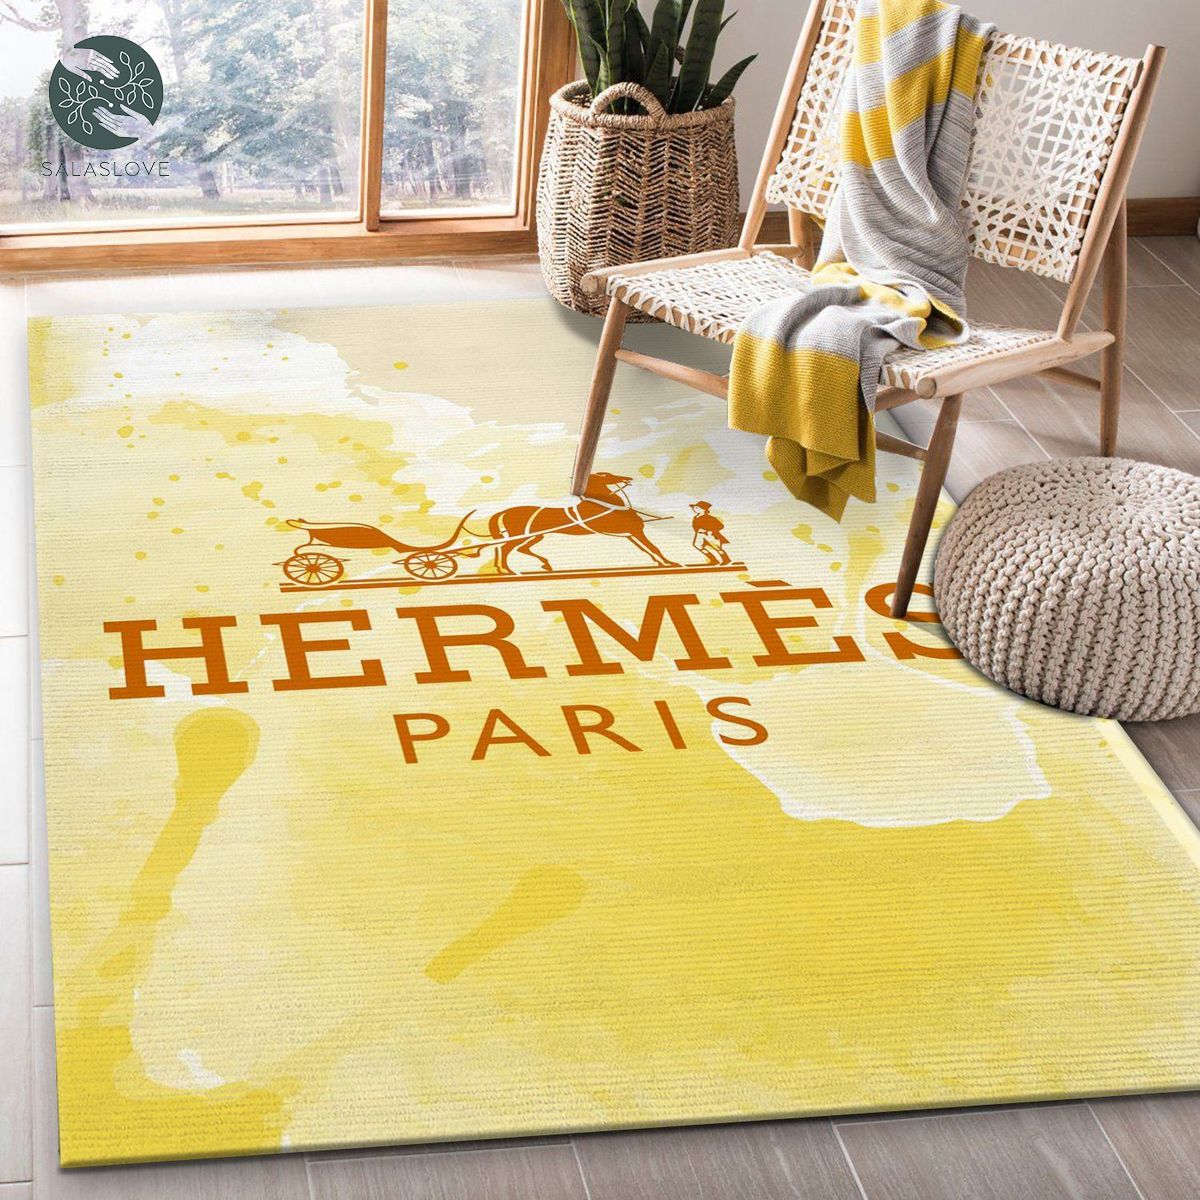 Hermes Paris Rug Living Room Rug Floor Decor For Home